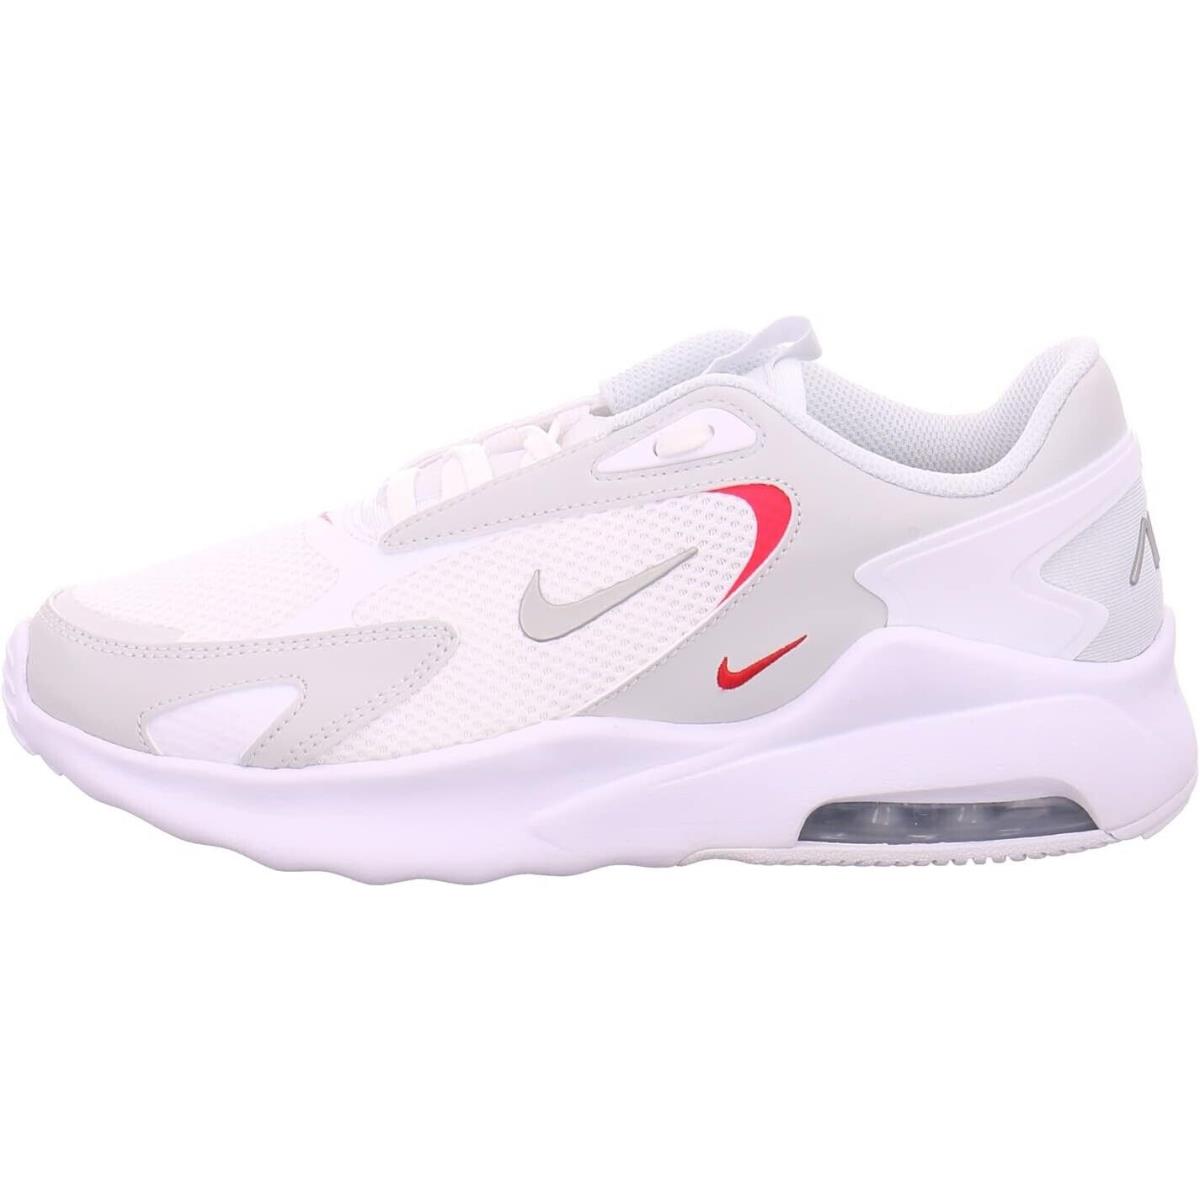 Nike Womens Air Max Bolt Running Shoes CU4152 102 - WHITE/MTLC/PLATINUM SIREN RED